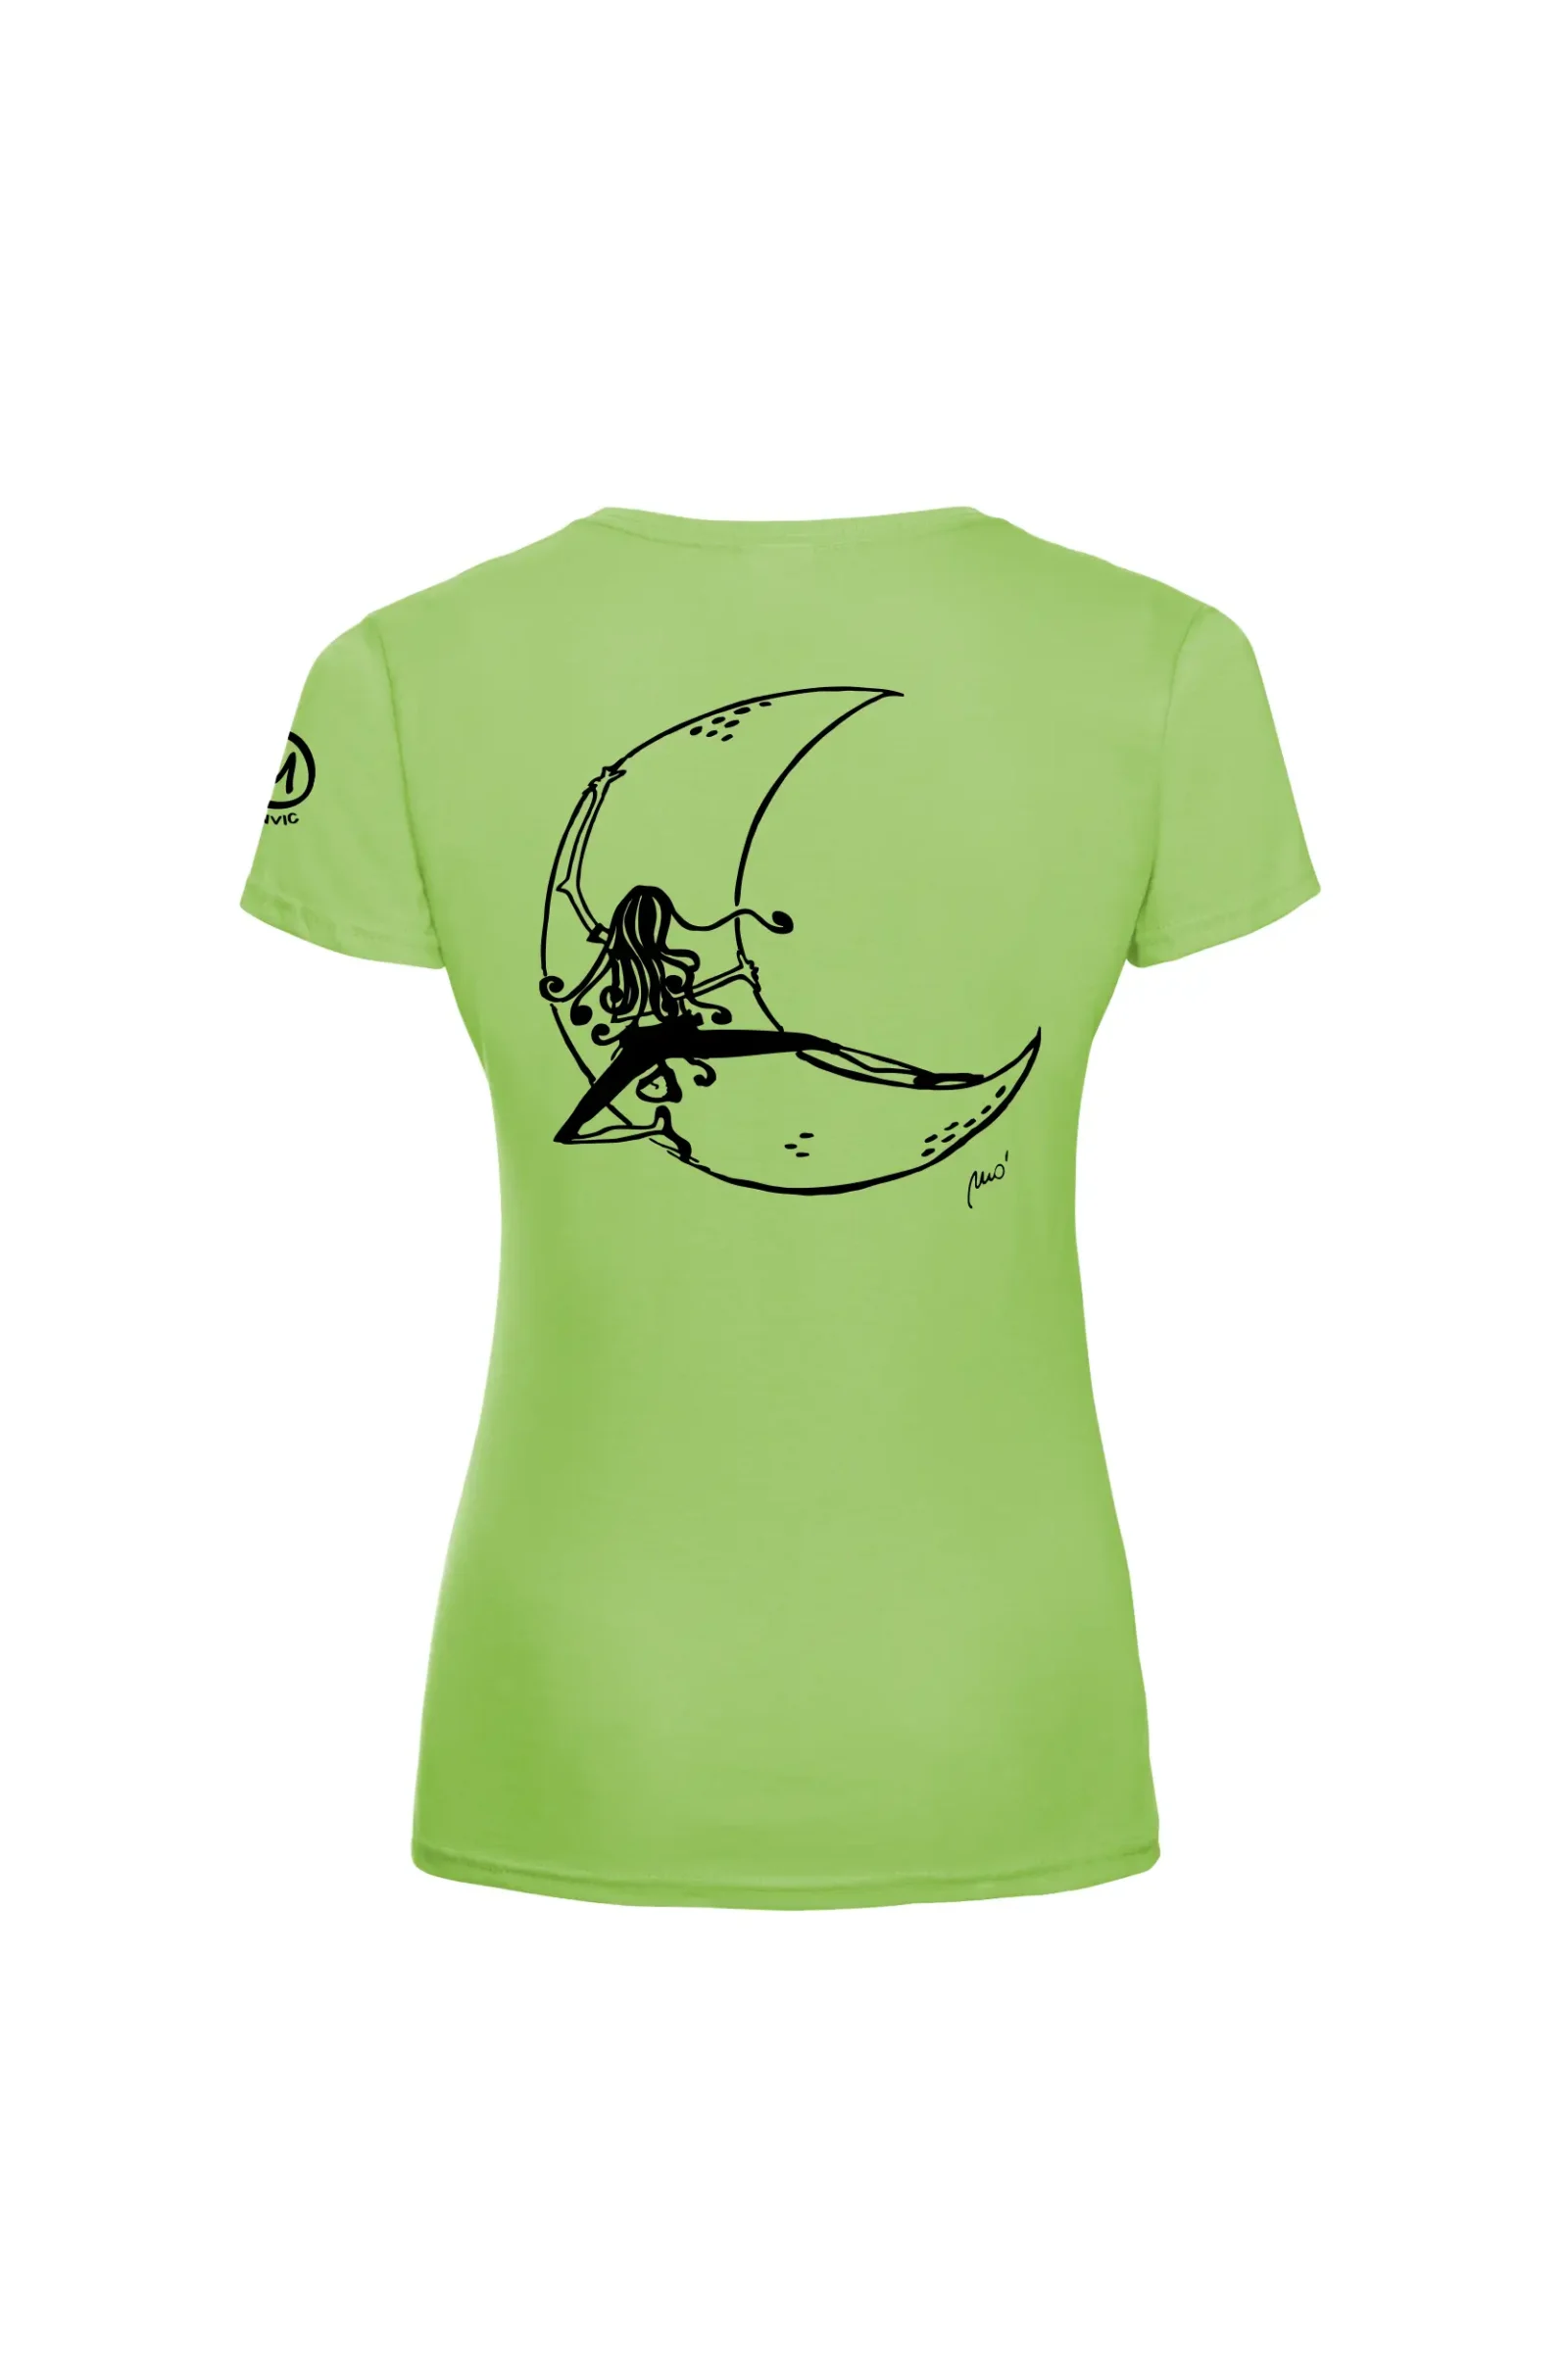 Women's climbing t-shirt - lime green cotton - "Moon" SHARON by MONVIC